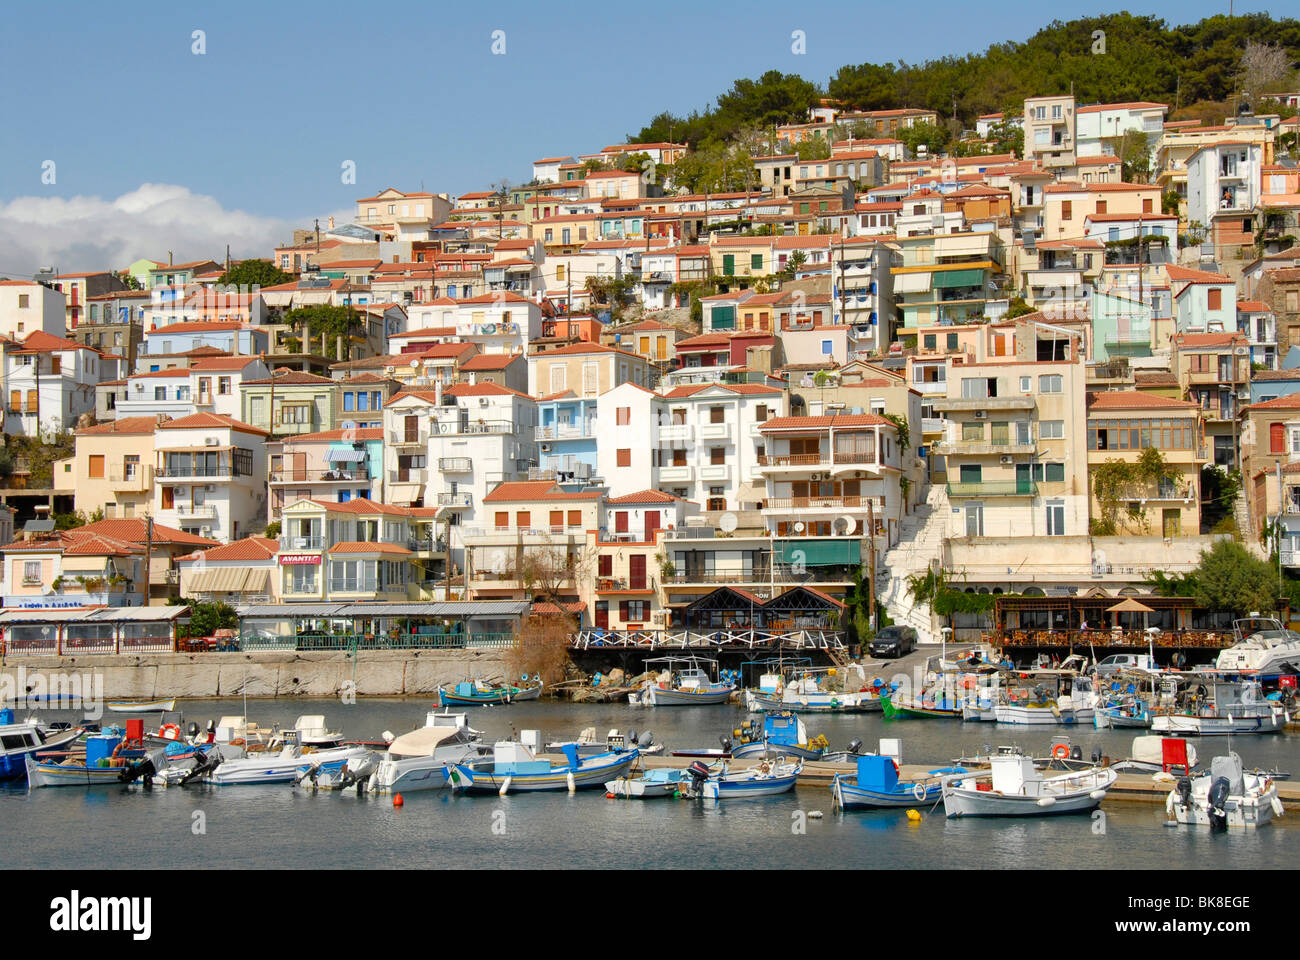 City on the harbour with fishing boats, Plomari, Lesbos island, Aegean Sea, Greece, Europe Stock Photo